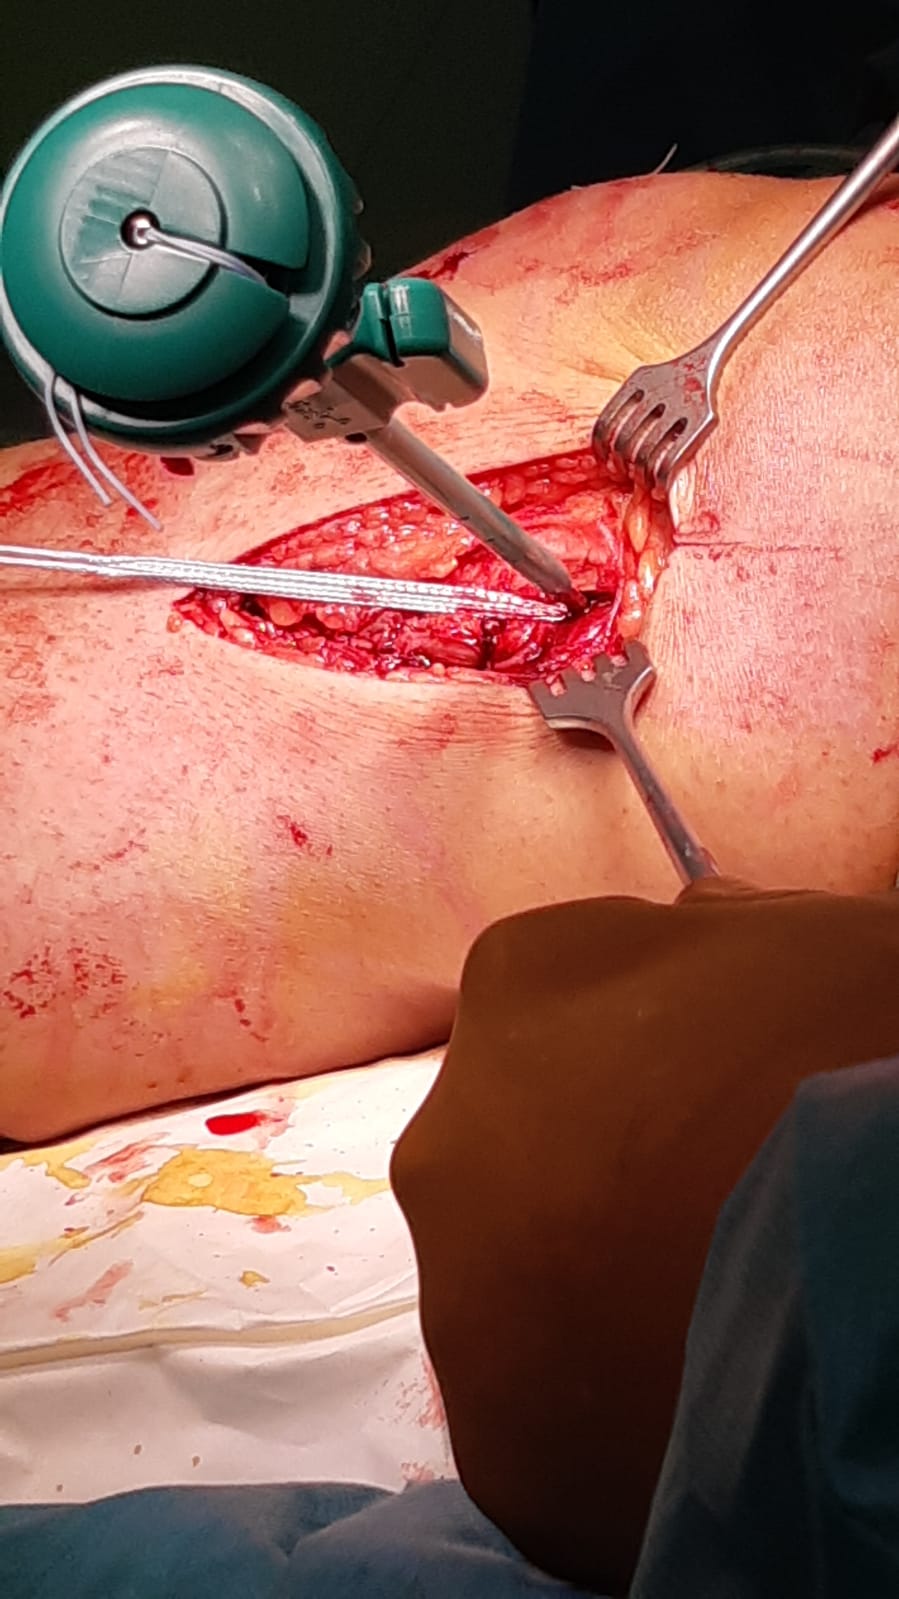 1533 fnsp zazilinska ortopedia zaviedla novy typ operacie kolena jpg